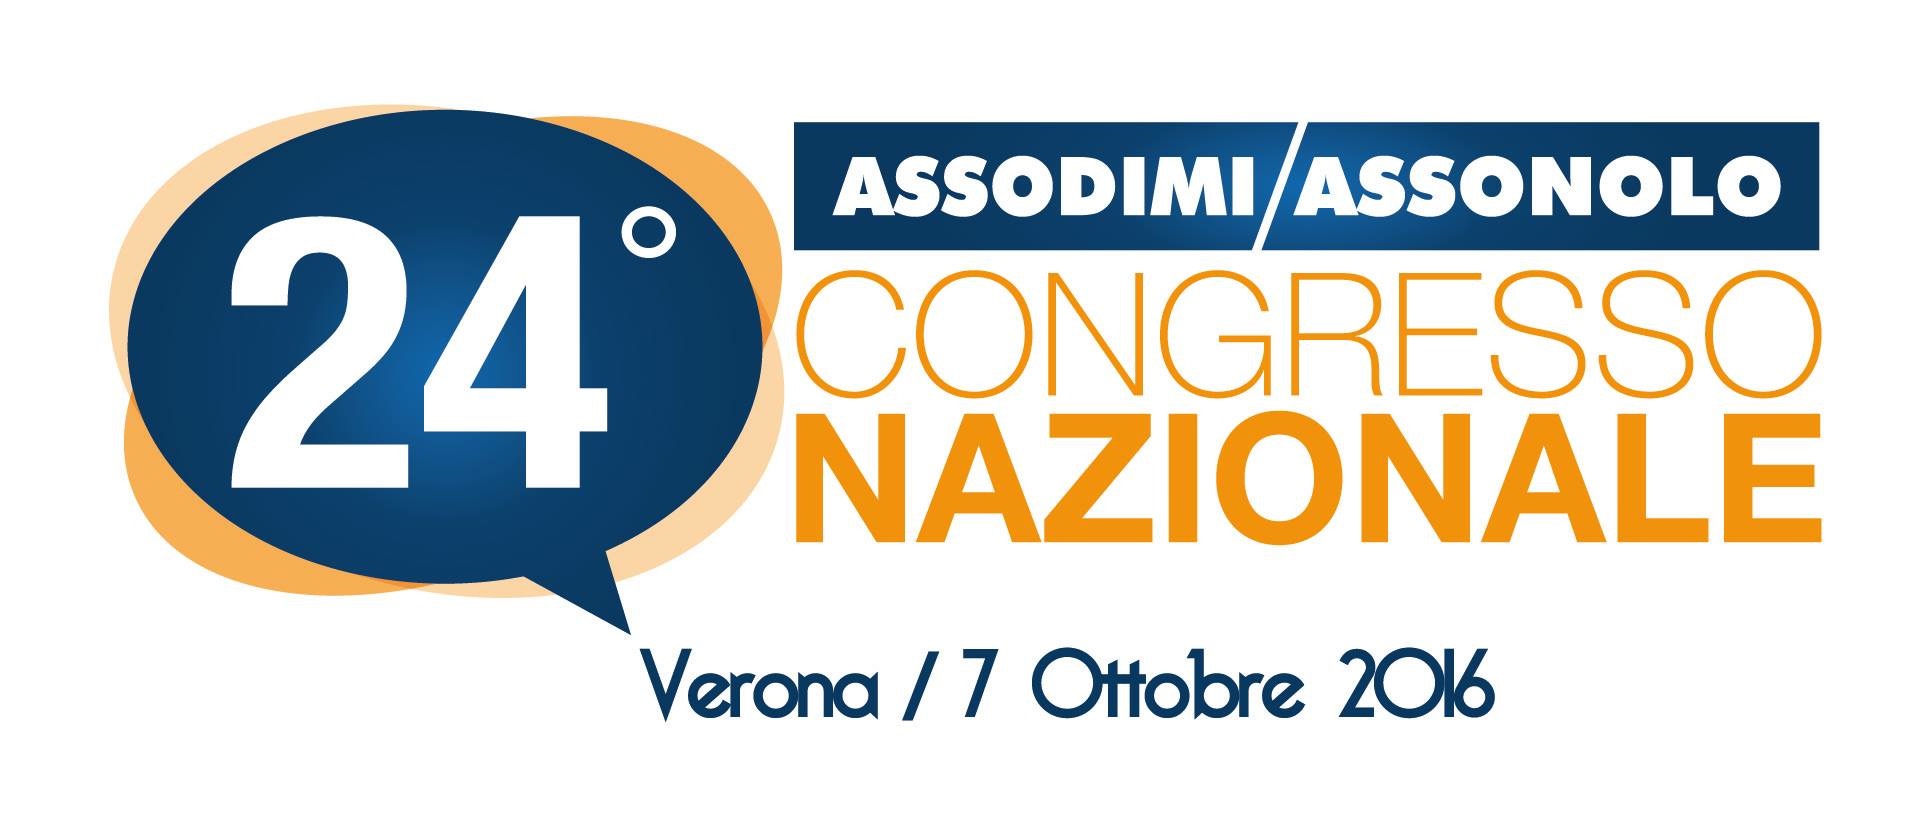 Assodimi / Assonolo, nationaler Kongress